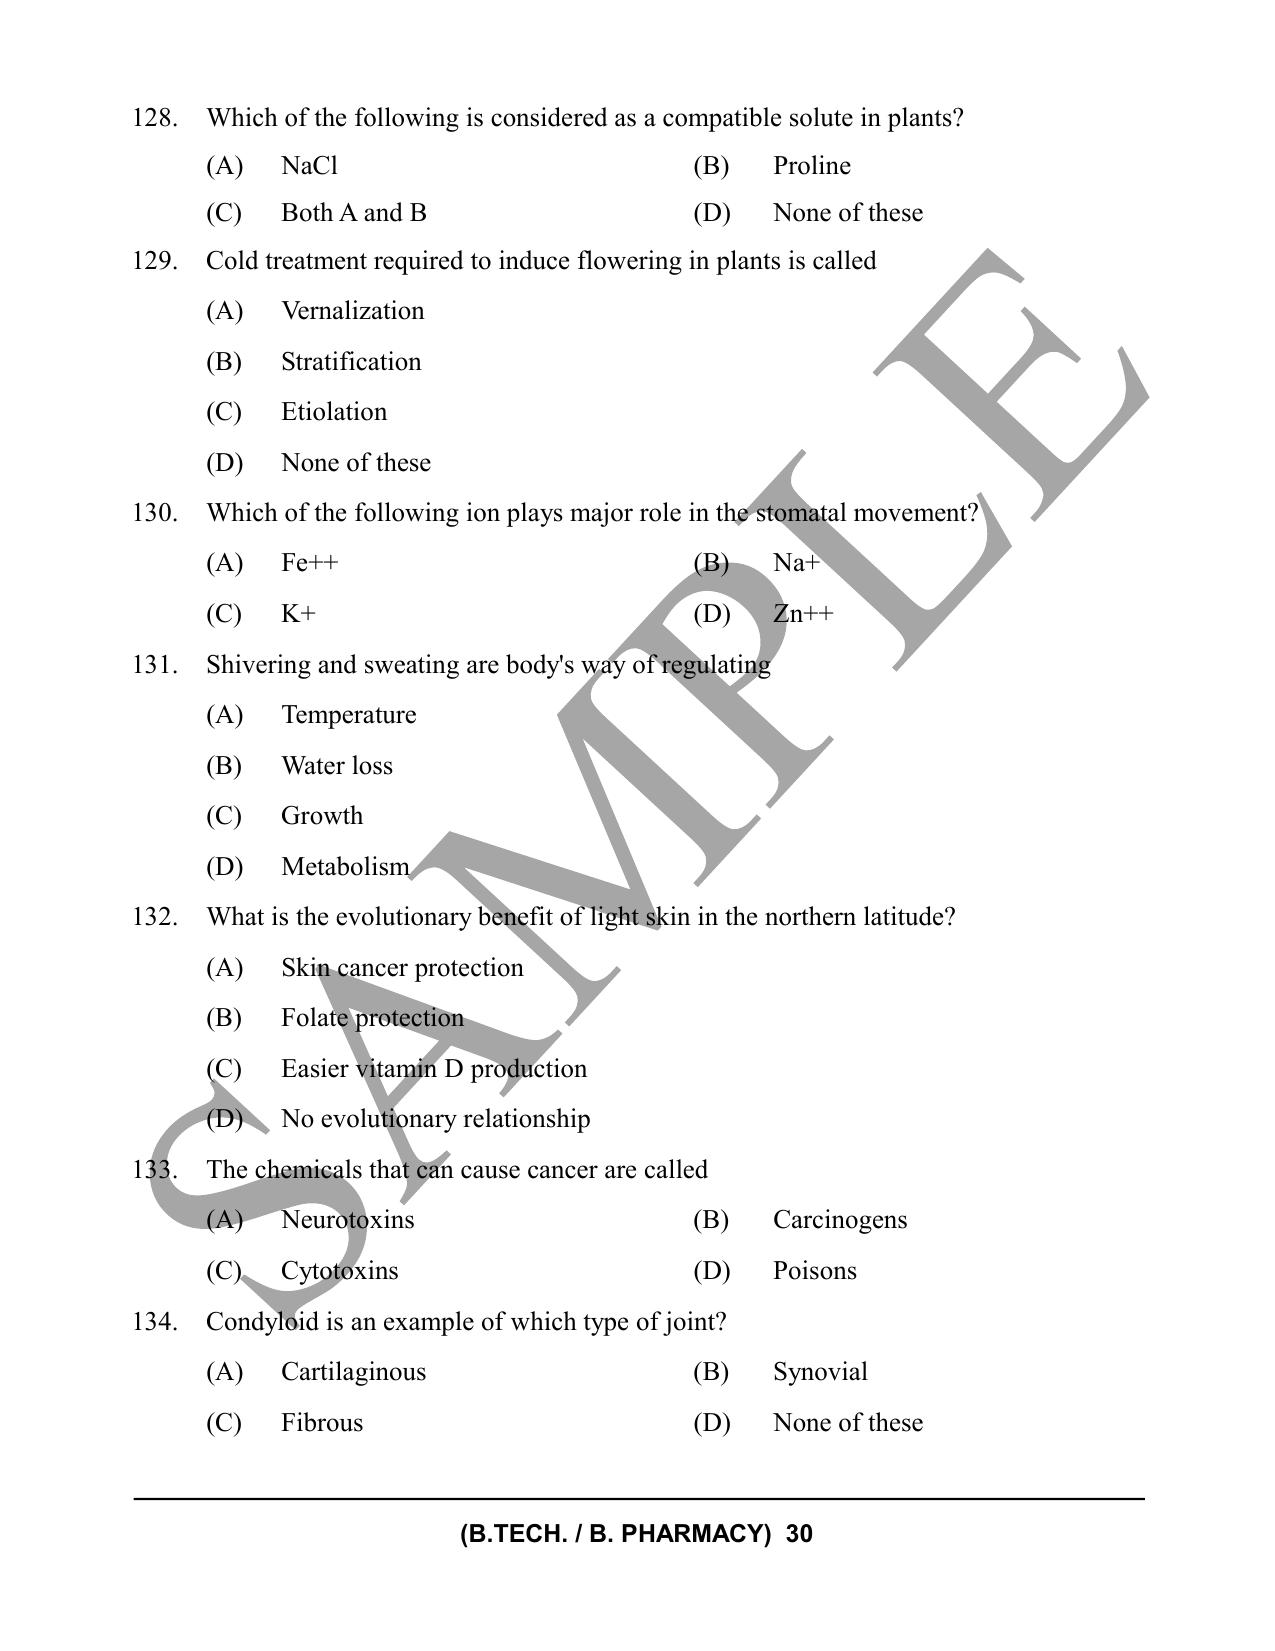 HPCET B. Tech. and B. Pharm. 2023 Sample Paper - Page 30